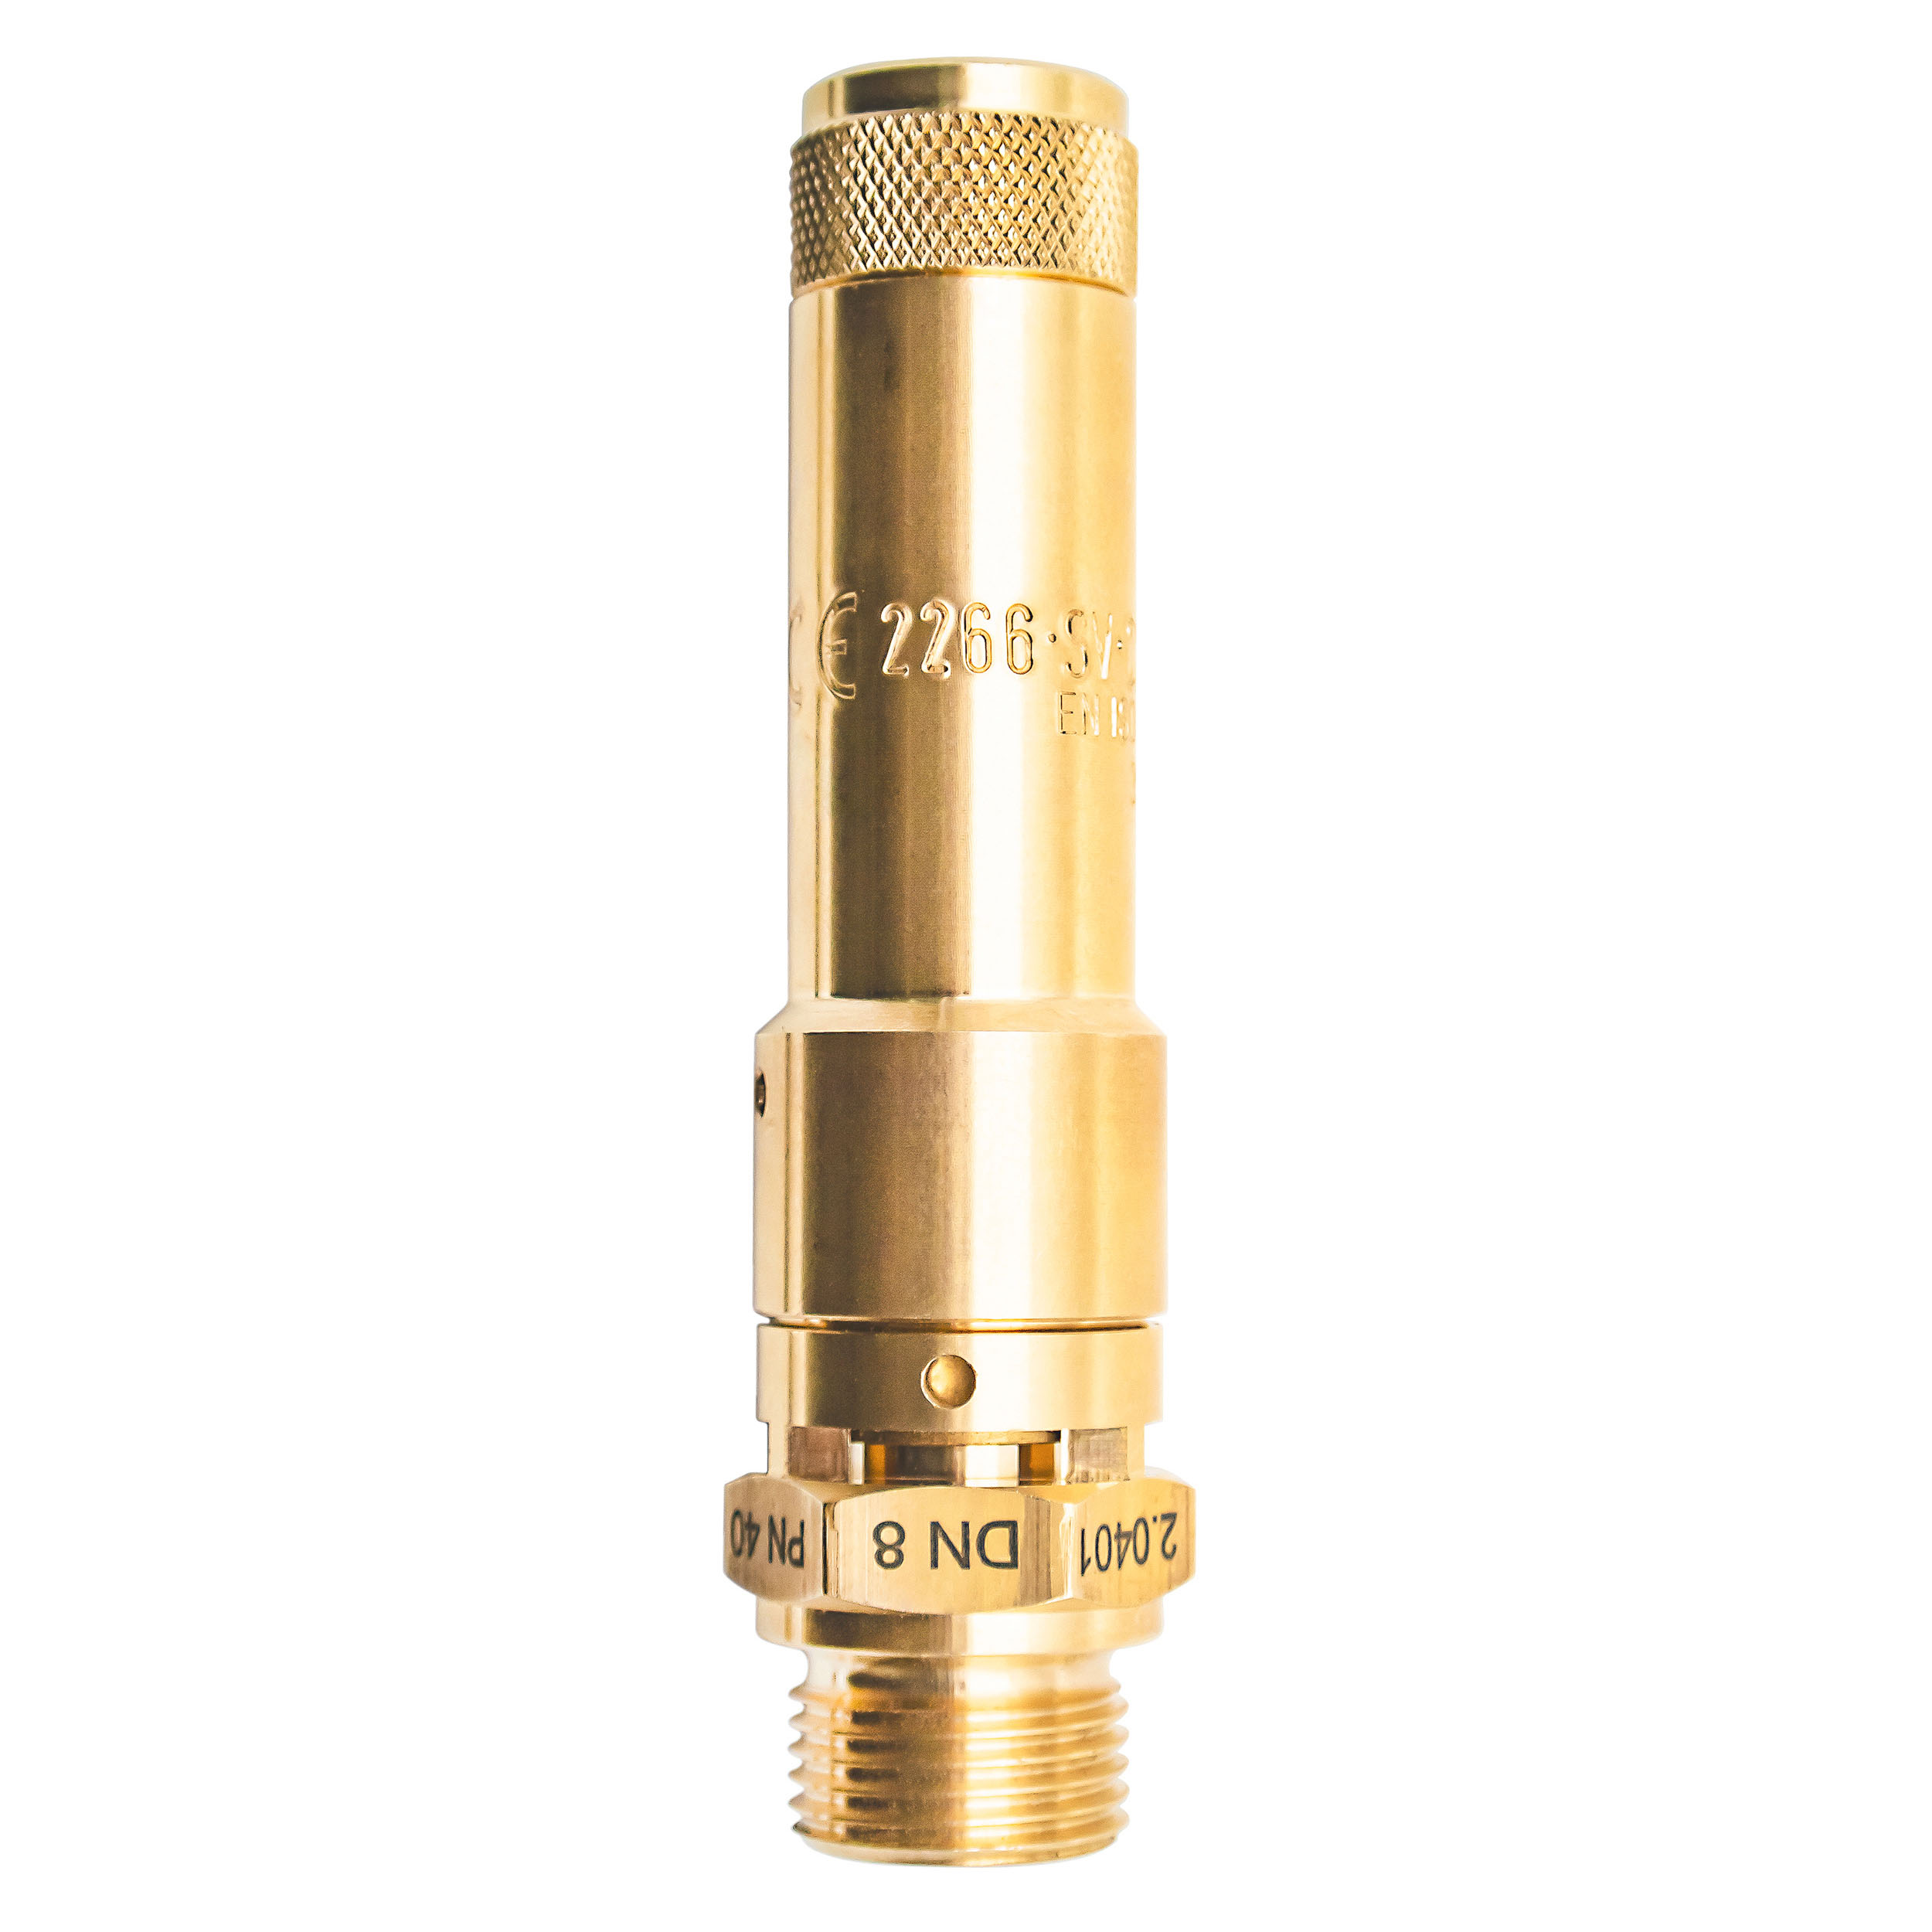 Savety valve component tested DN 8, G½, set pressure: 4.5 bar (65,25 psi)